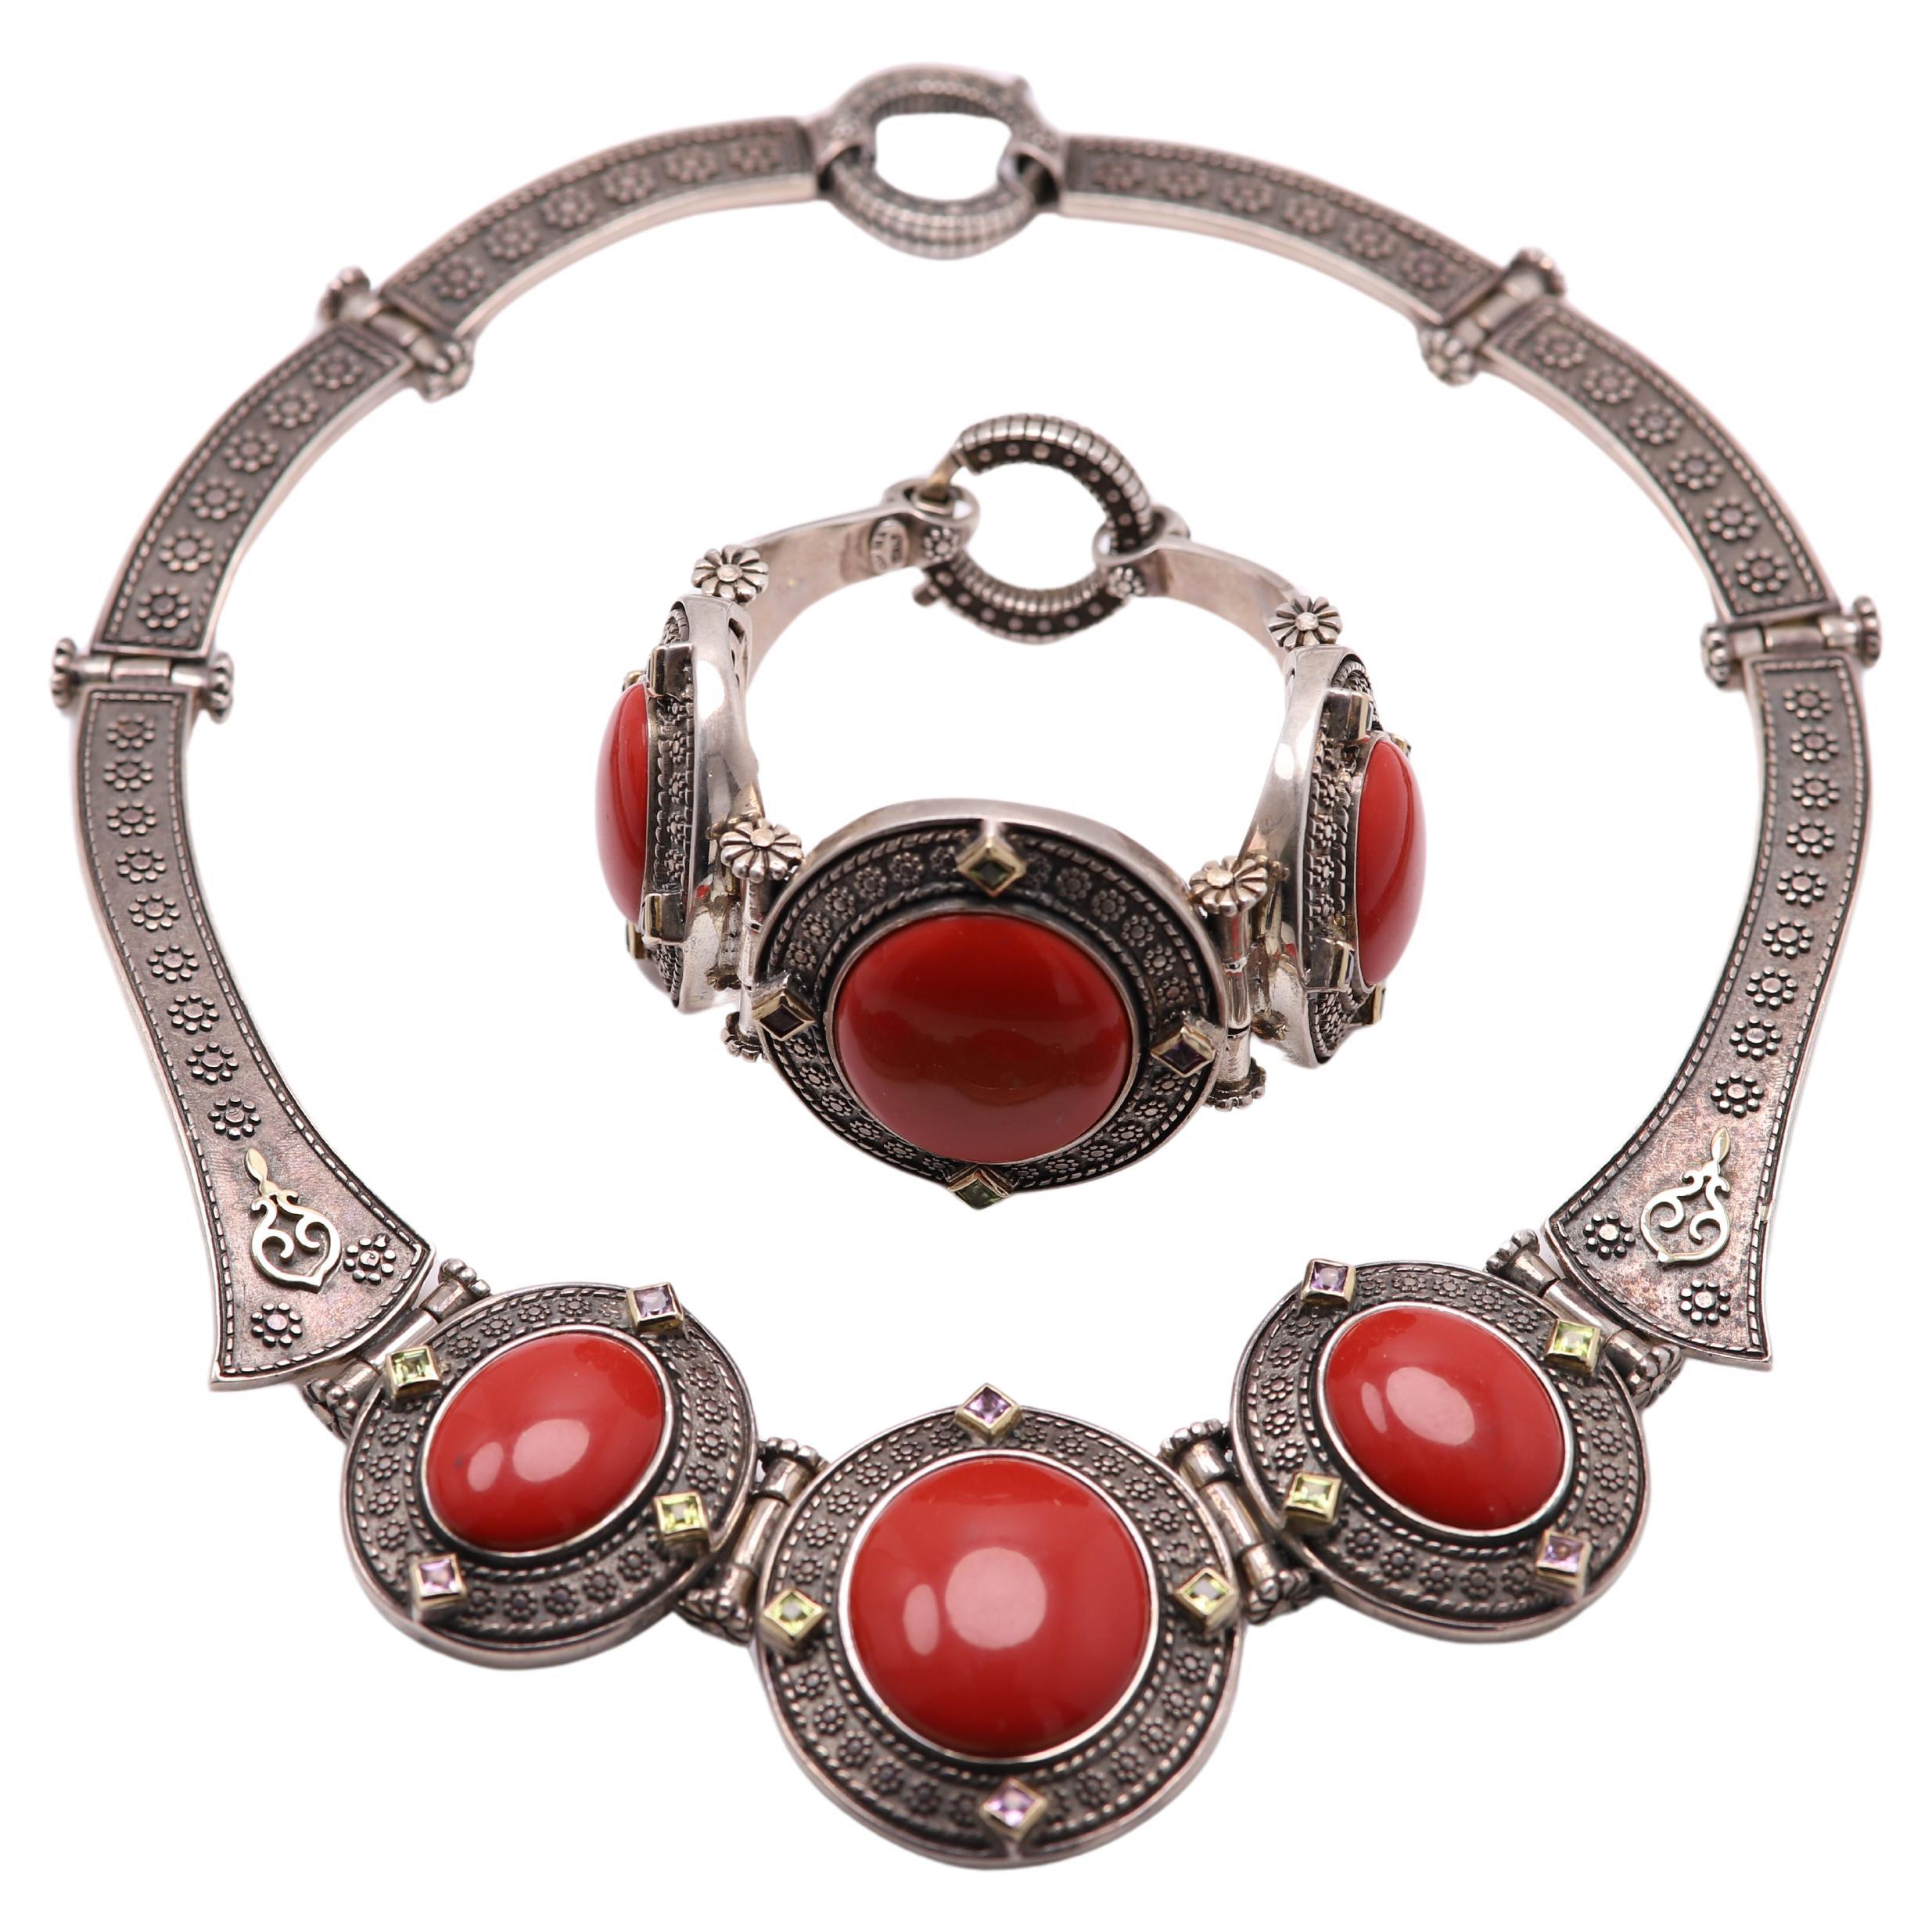 Gothic Revival Link Necklaces